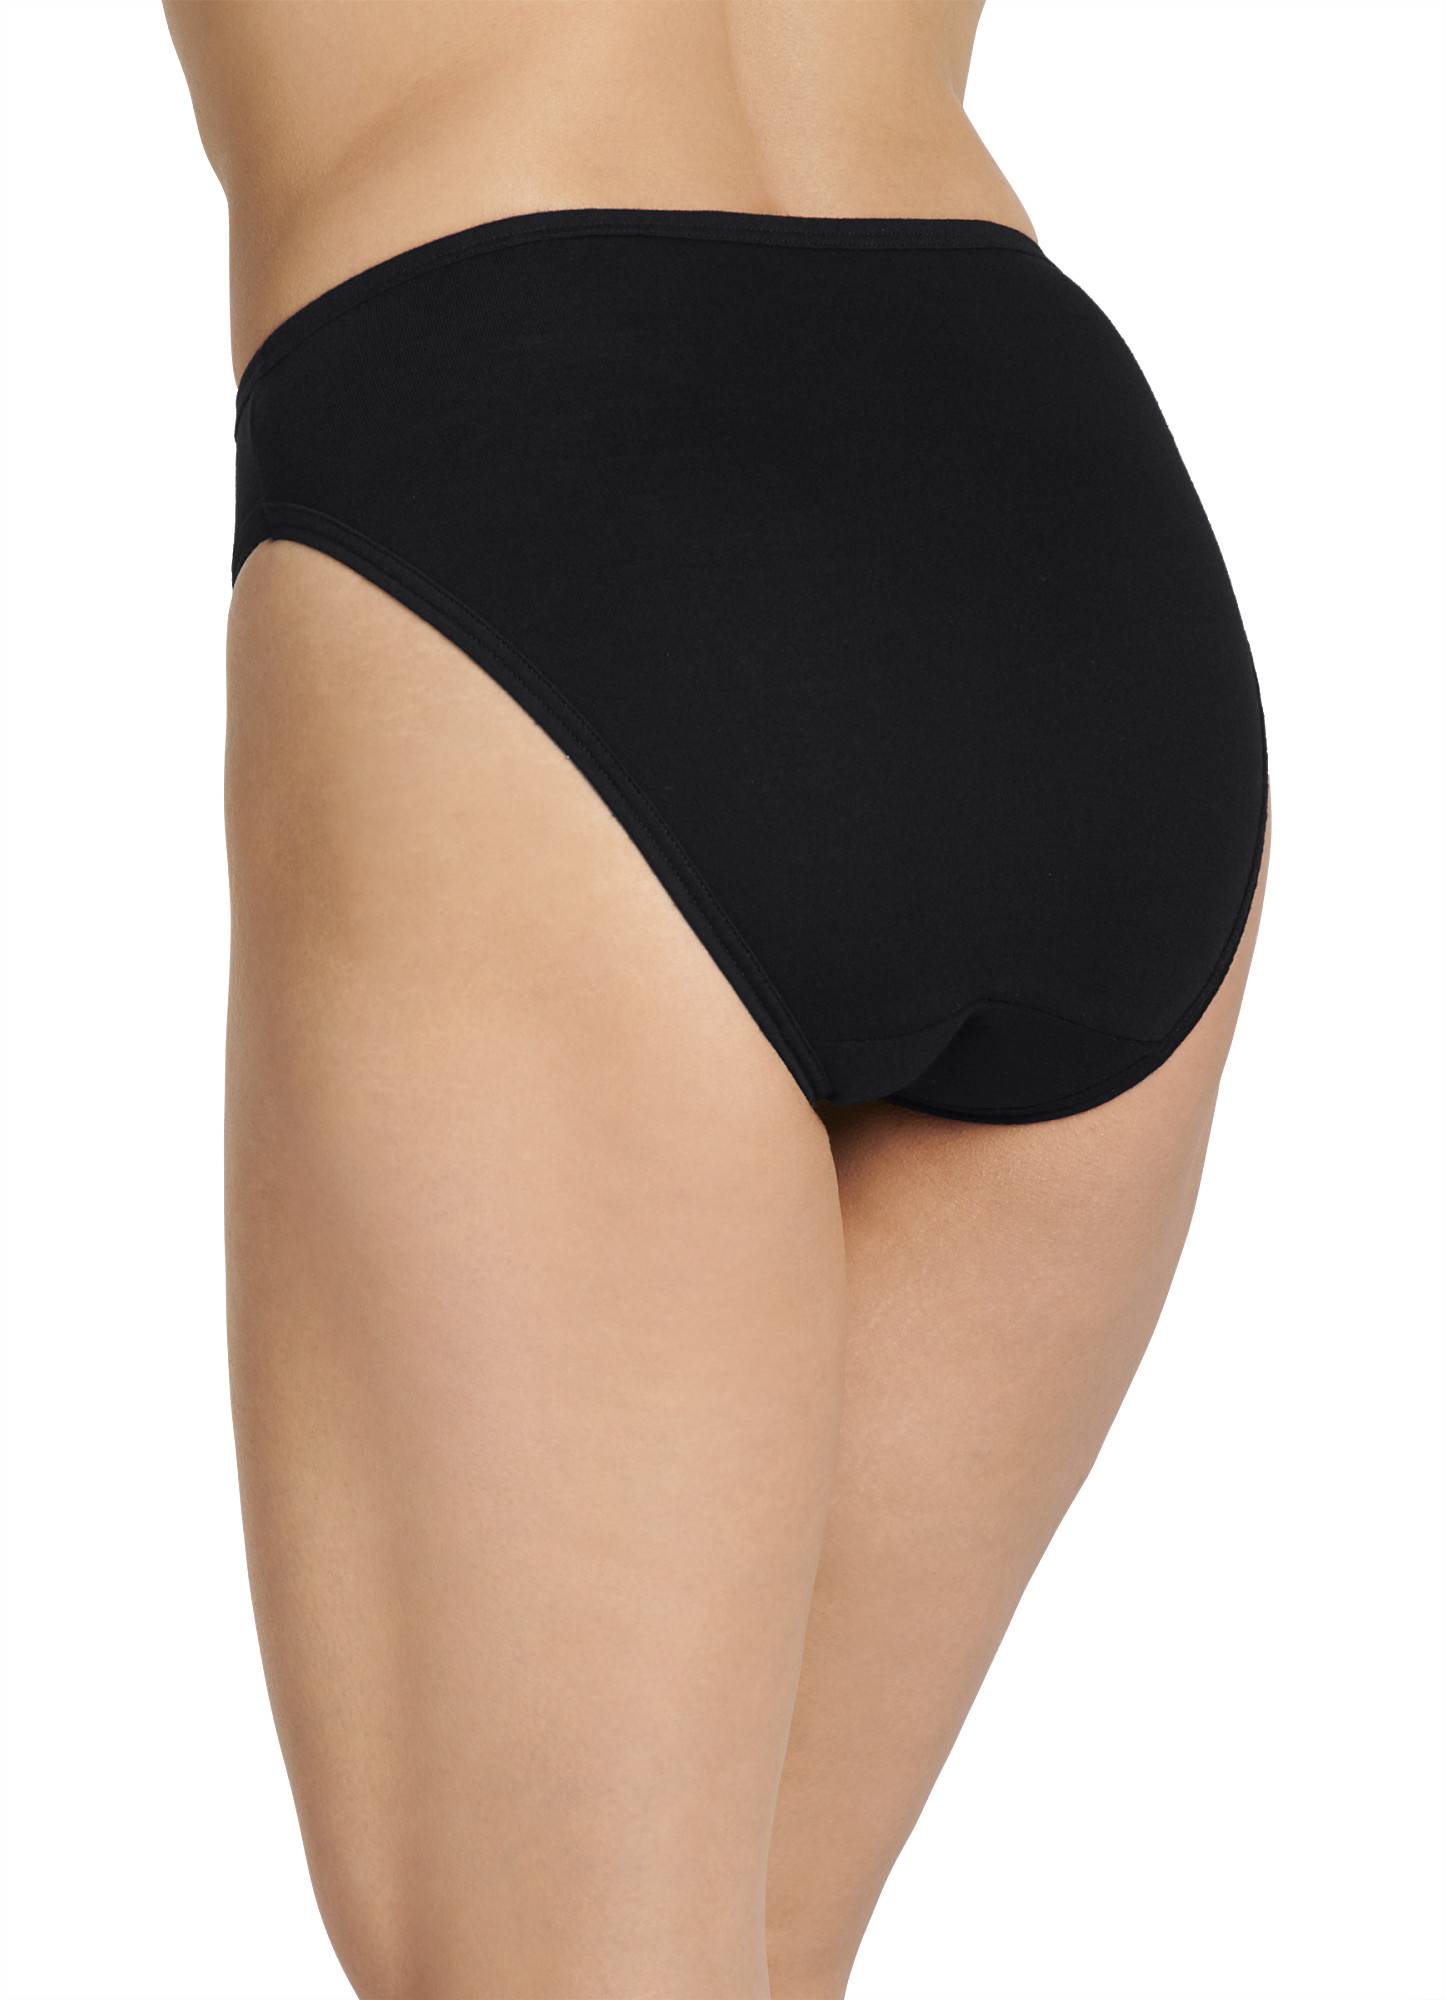 3 Jockey Elance Women's French Cuts Panties Black Higher Cut Legs Cotton  Size 6 for sale online